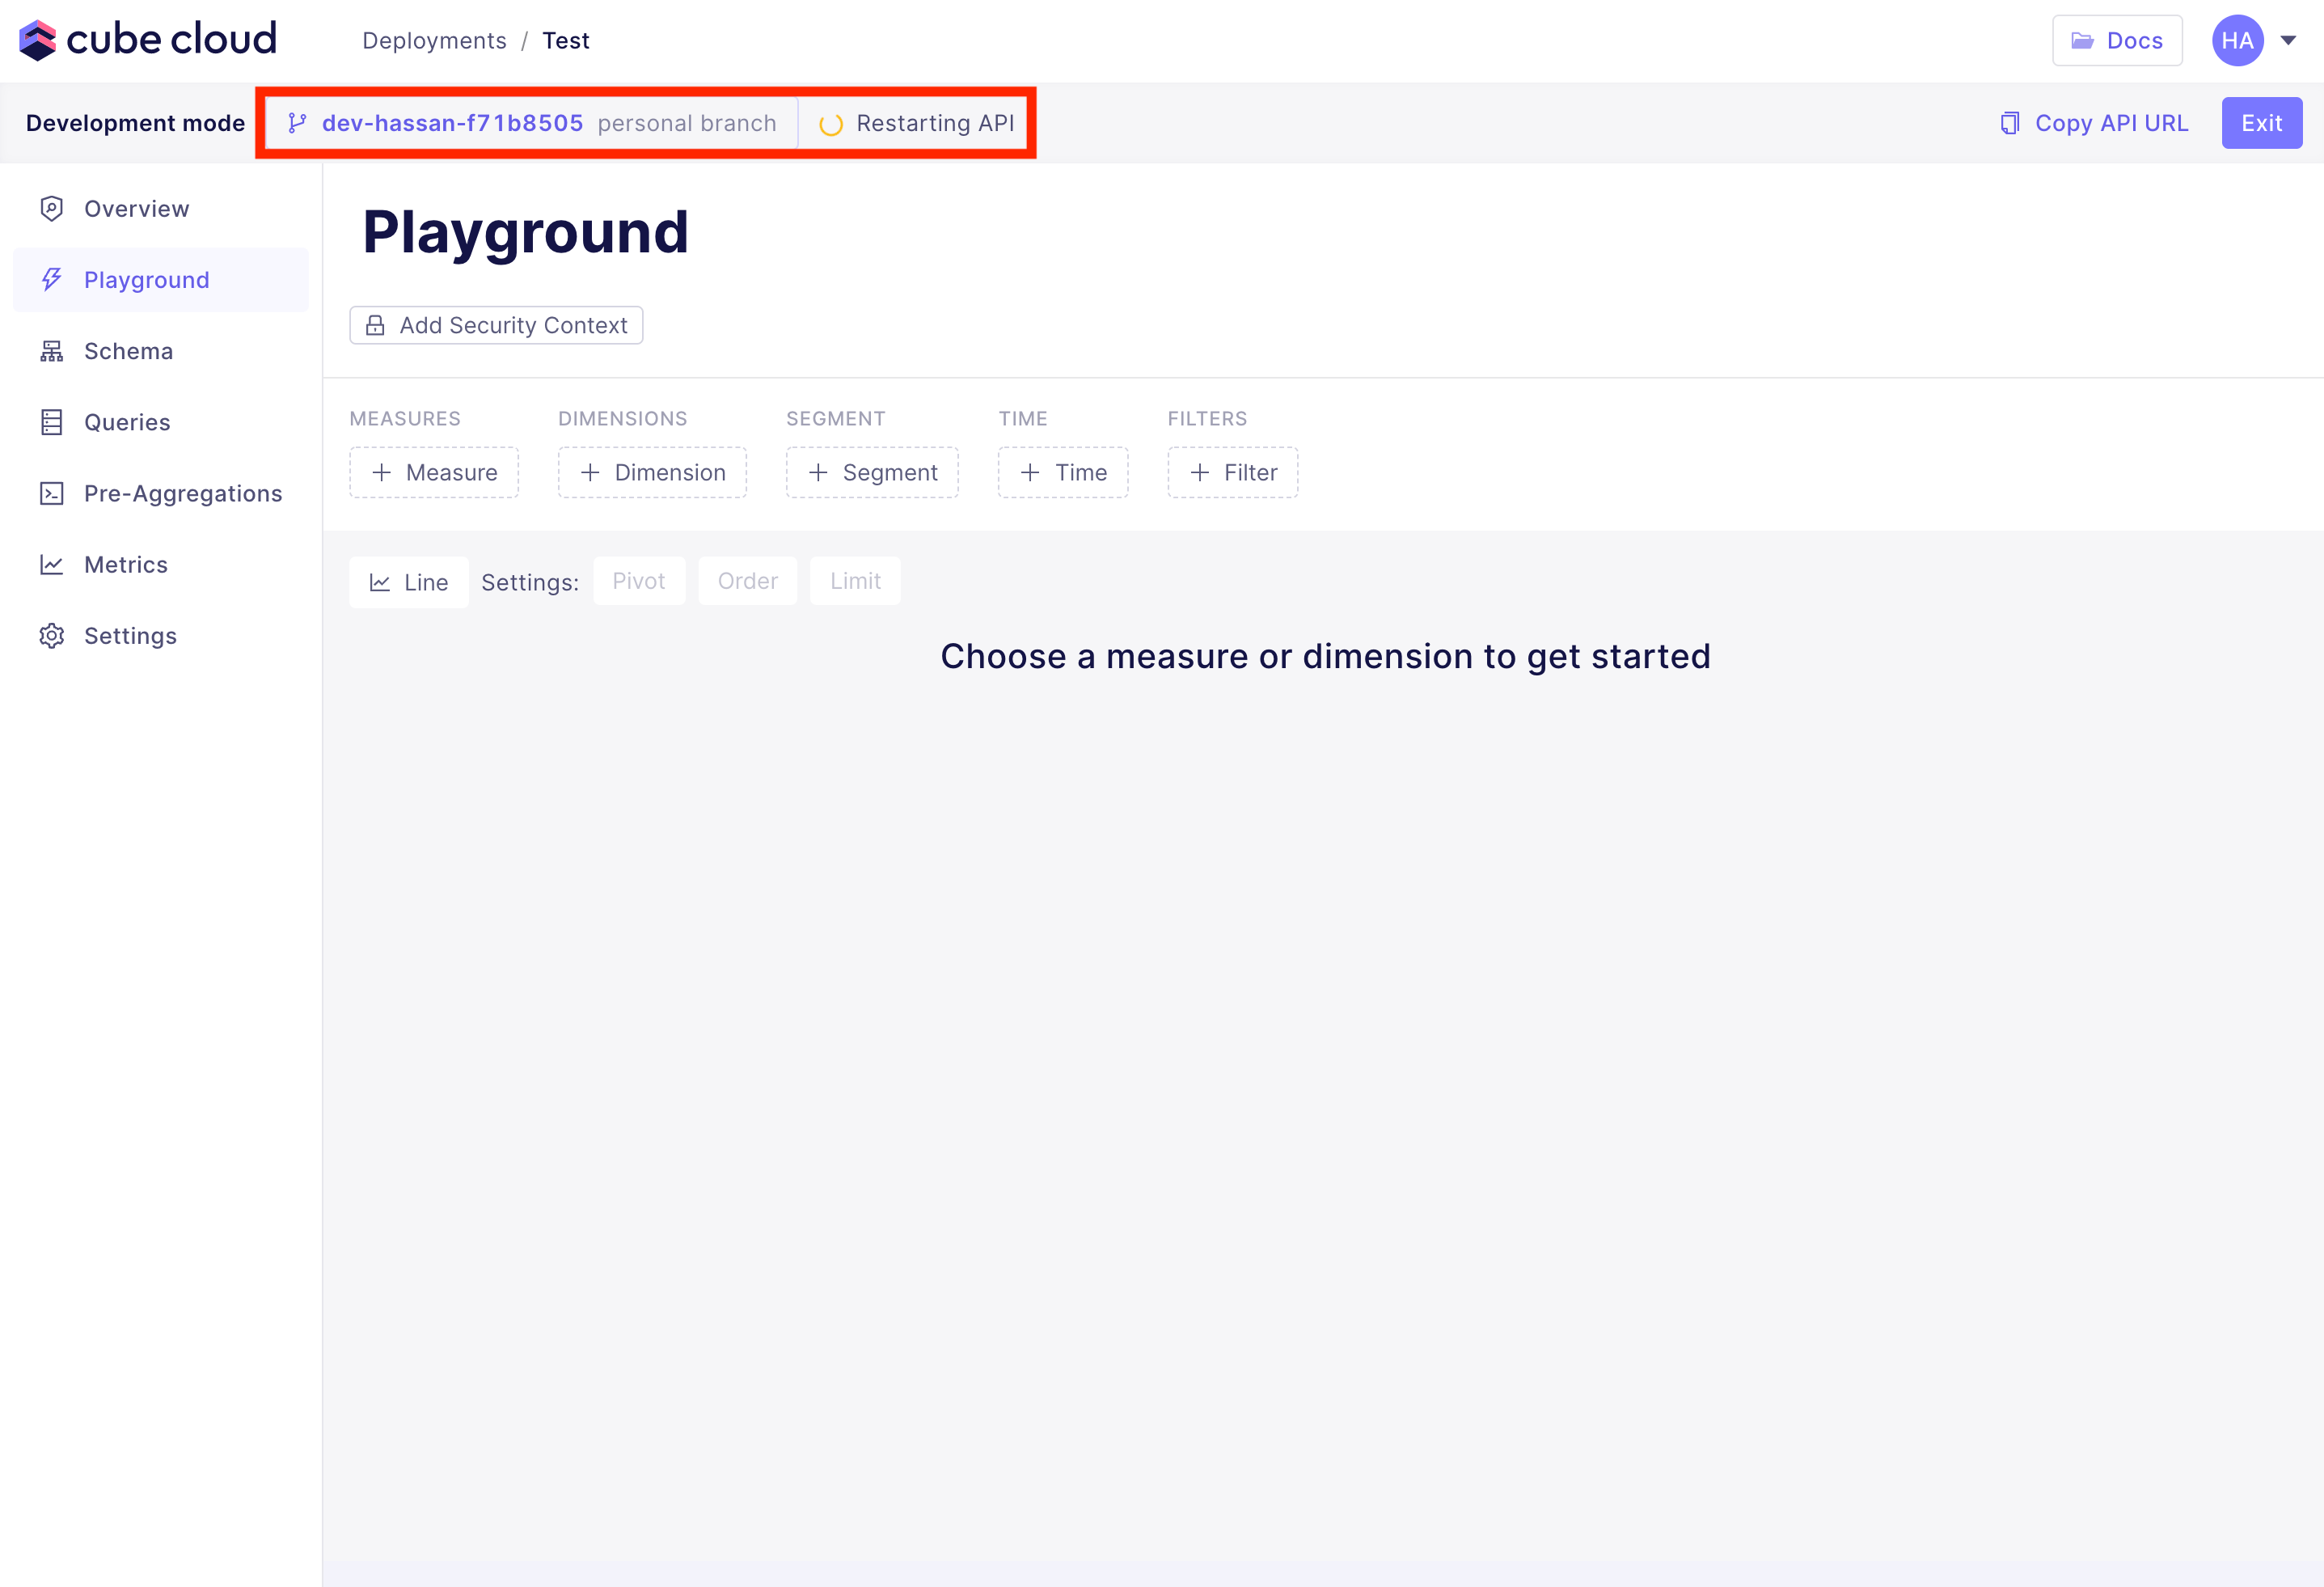 Playground during API restart